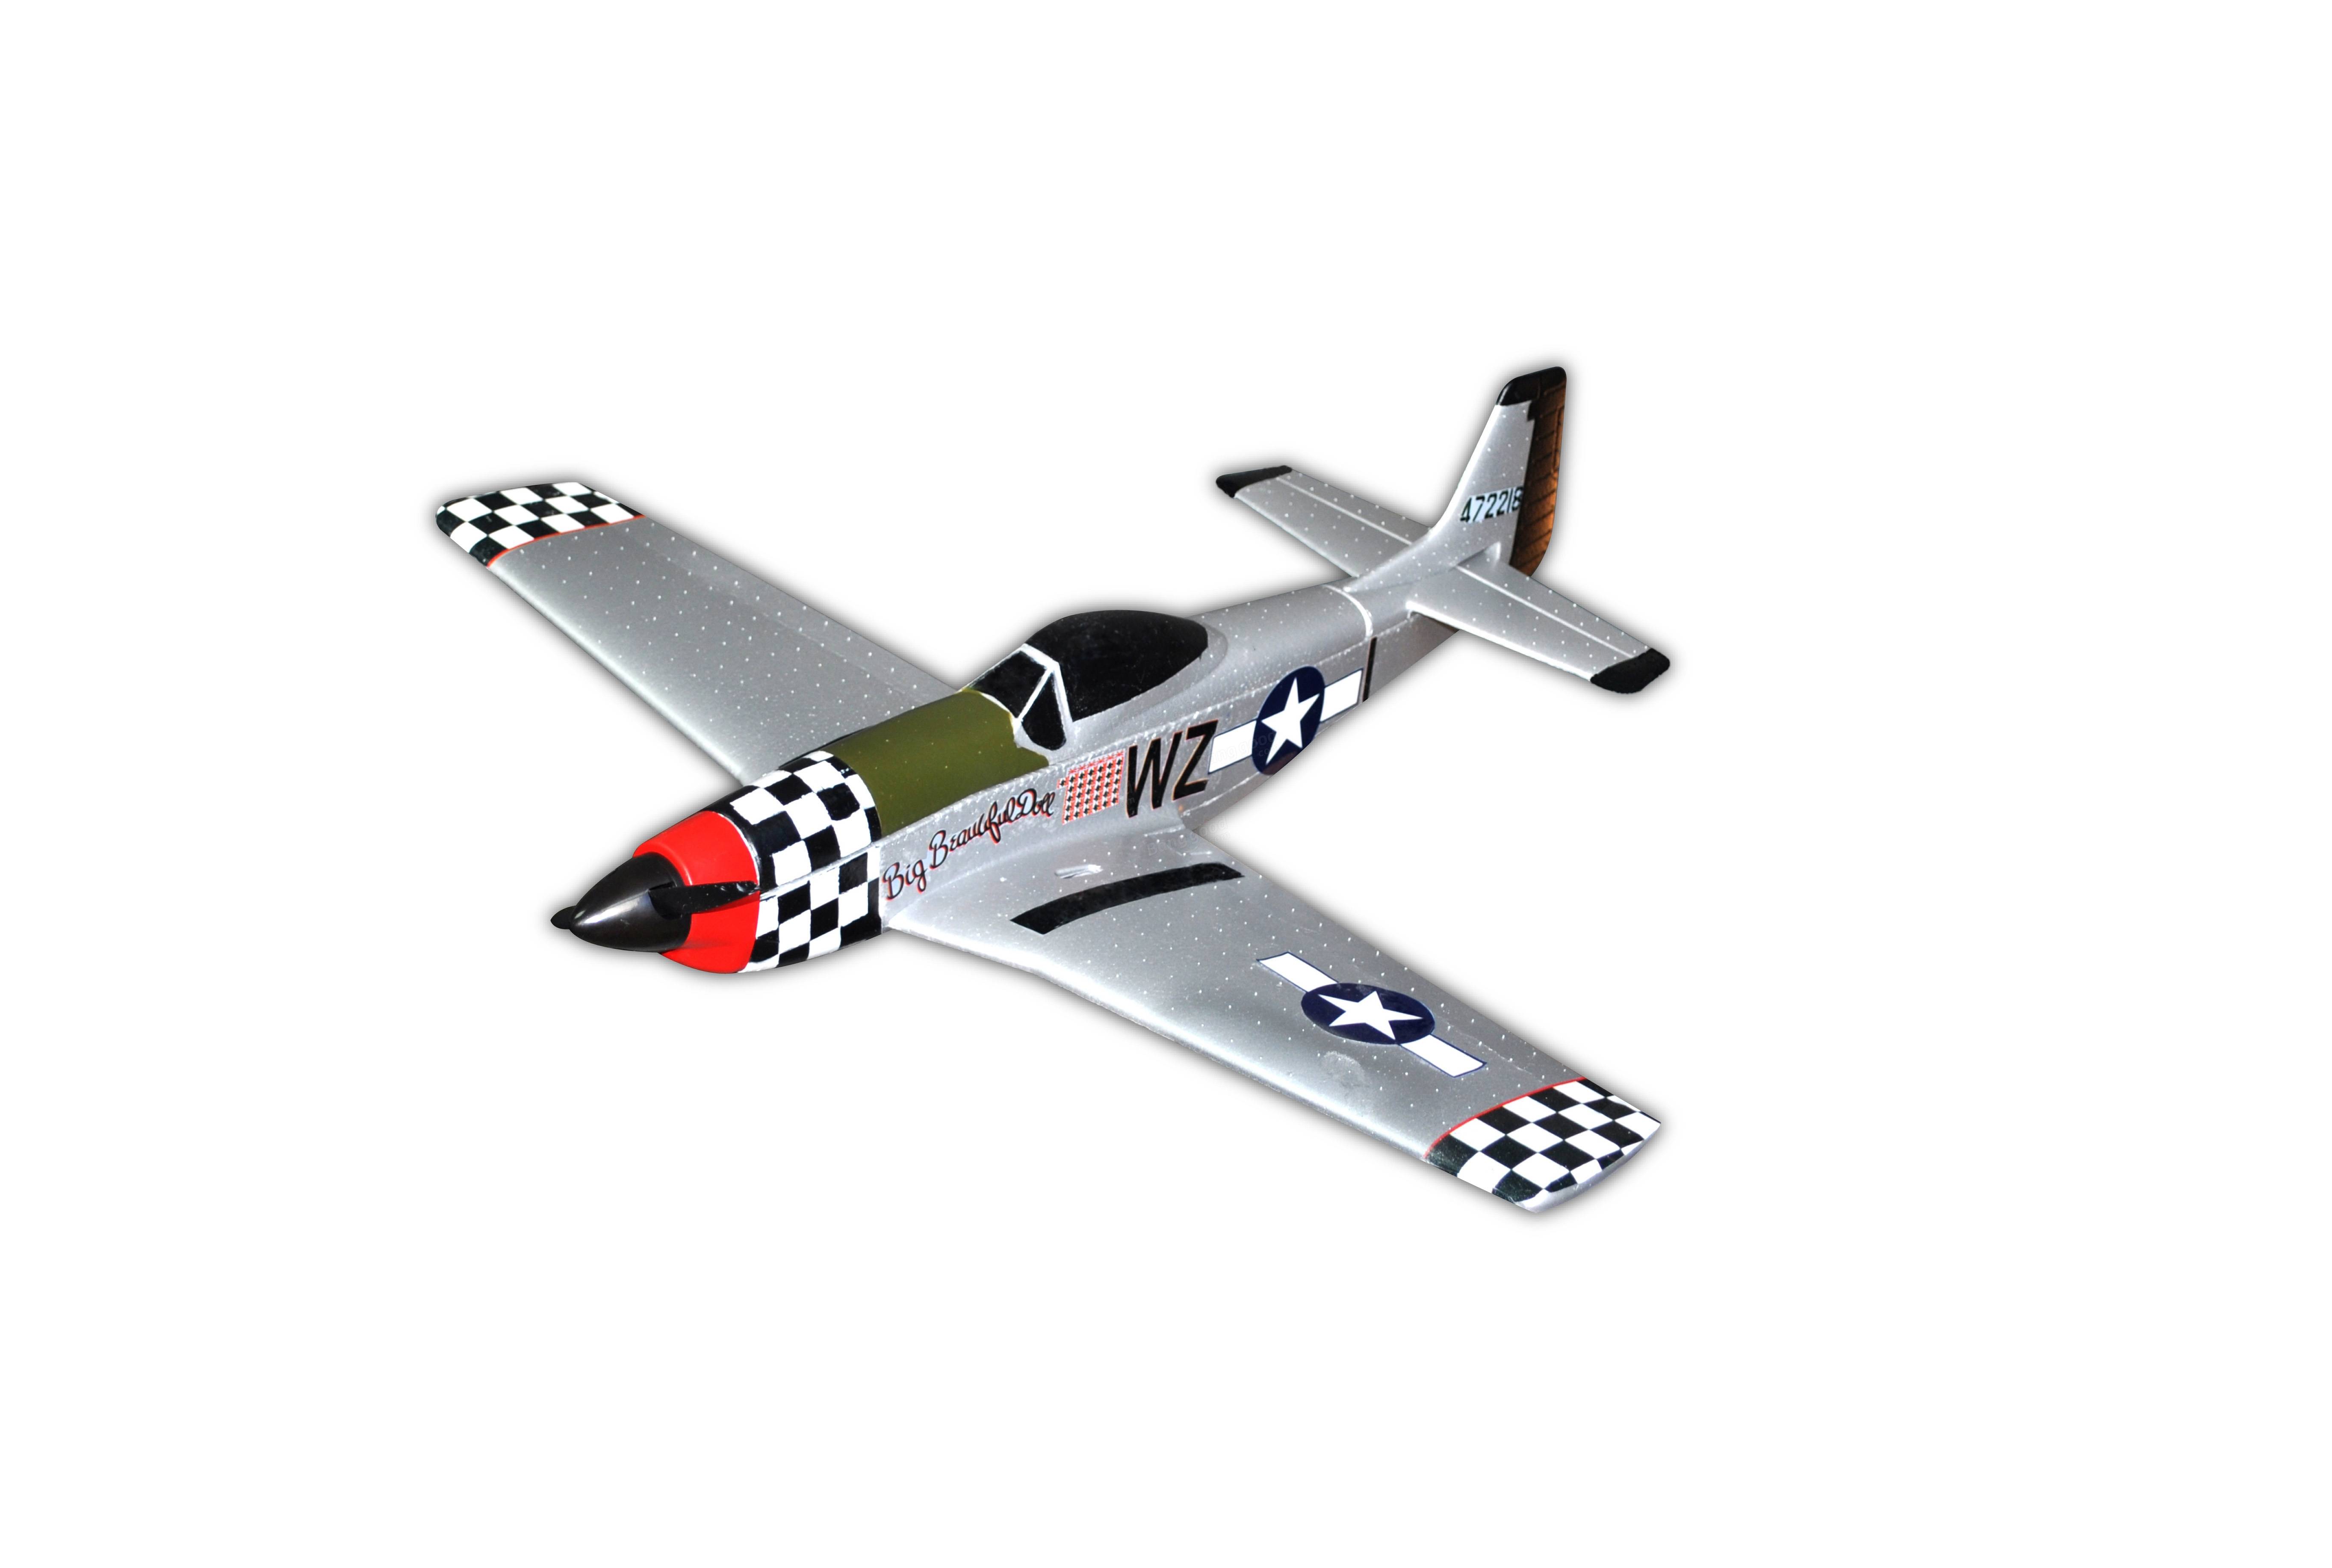 51 650. Радиоуправляемый самолет Volantex RC p51d. Радиоуправляемый Mustang p51d RC симулятор. Eachine RC plane. Eachine Swordfish RC plane.